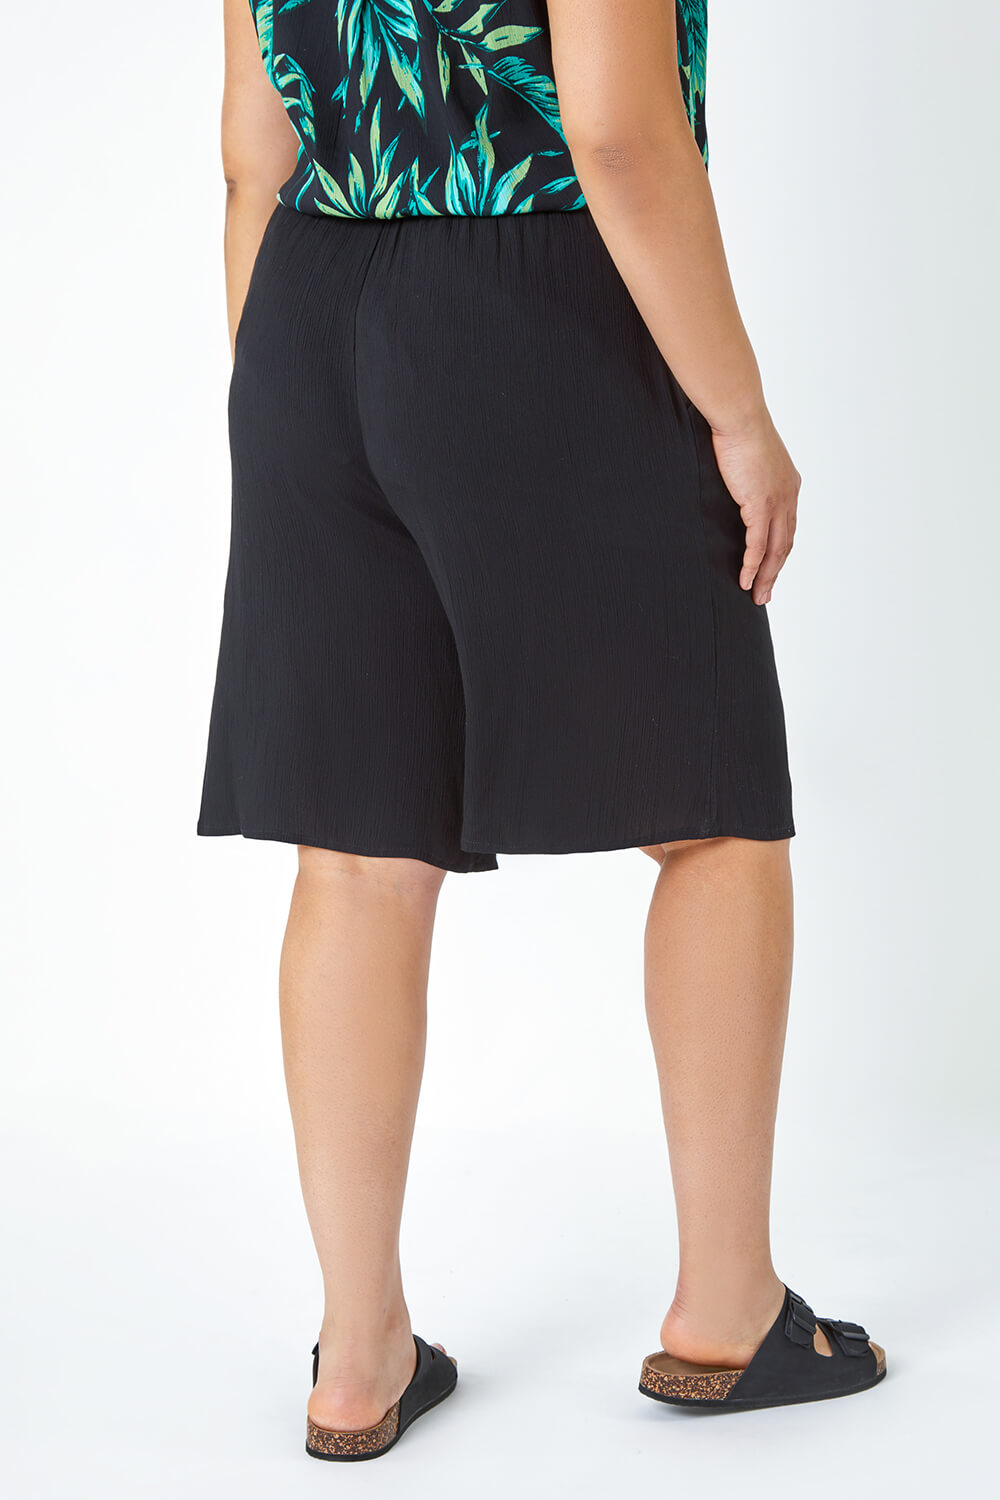 Black Curve Plain Crinkle Pocket Shorts, Image 3 of 5